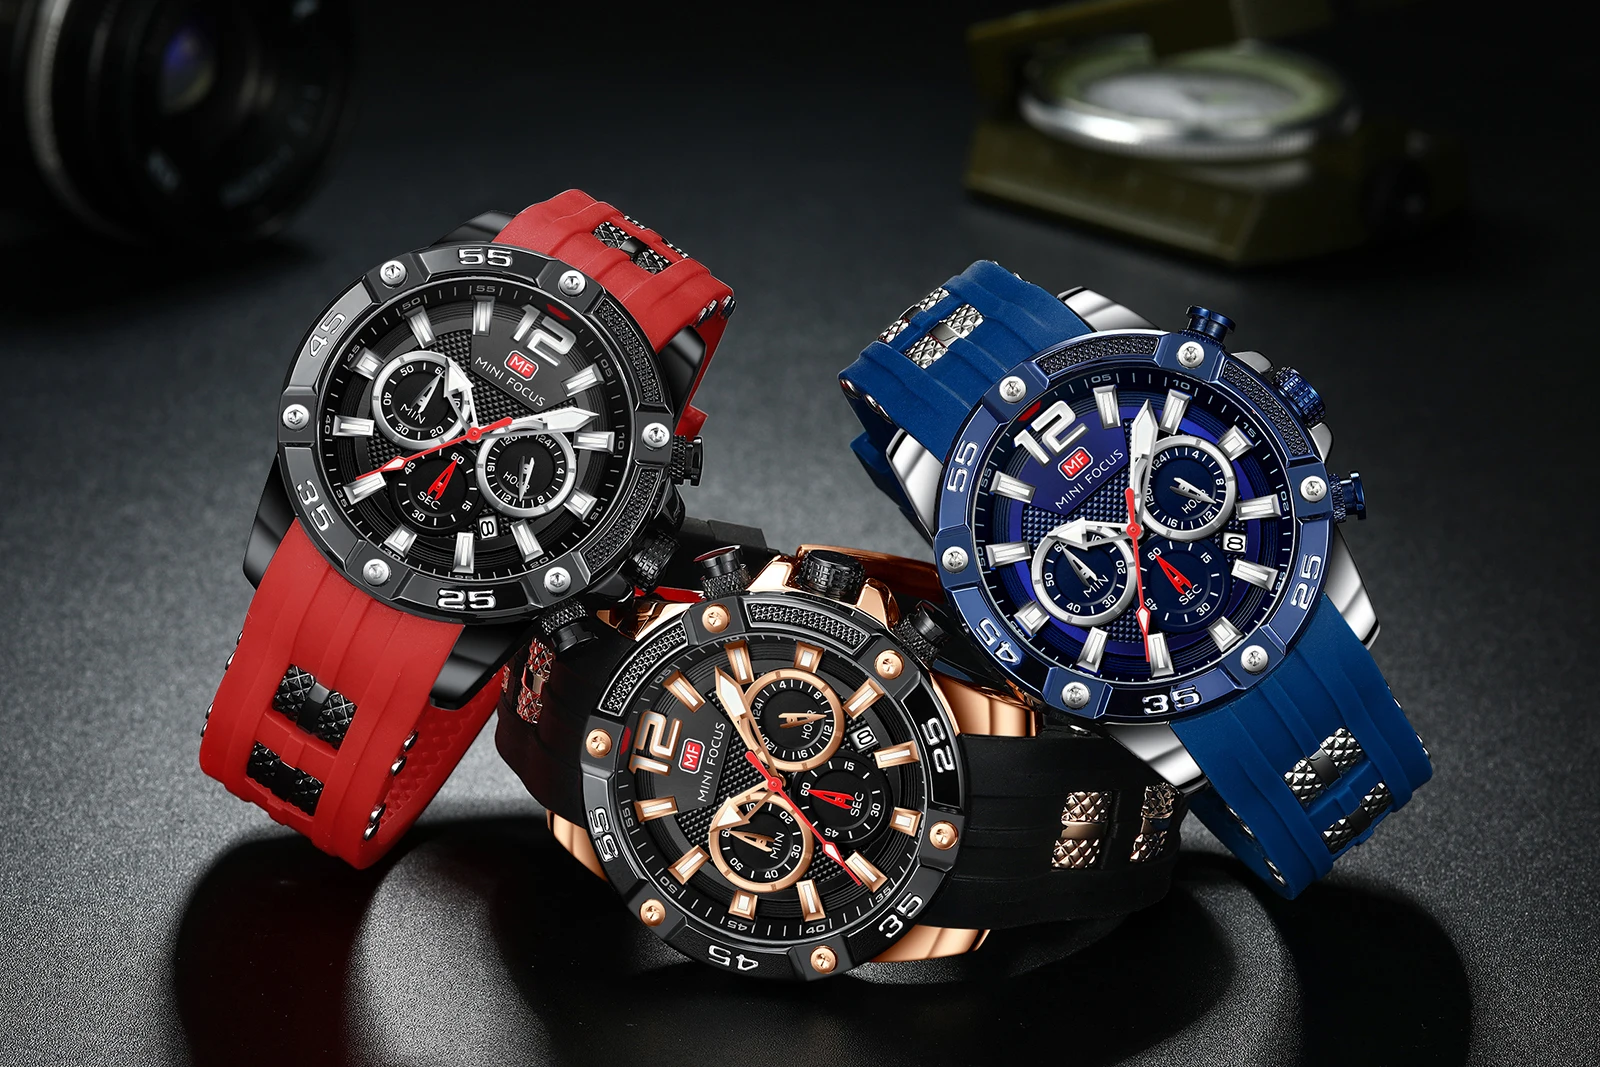 2022 hot sale new arrival watches quartz cheap branded chrono watch wholesale ceasuri barbati fashion sports watches for man